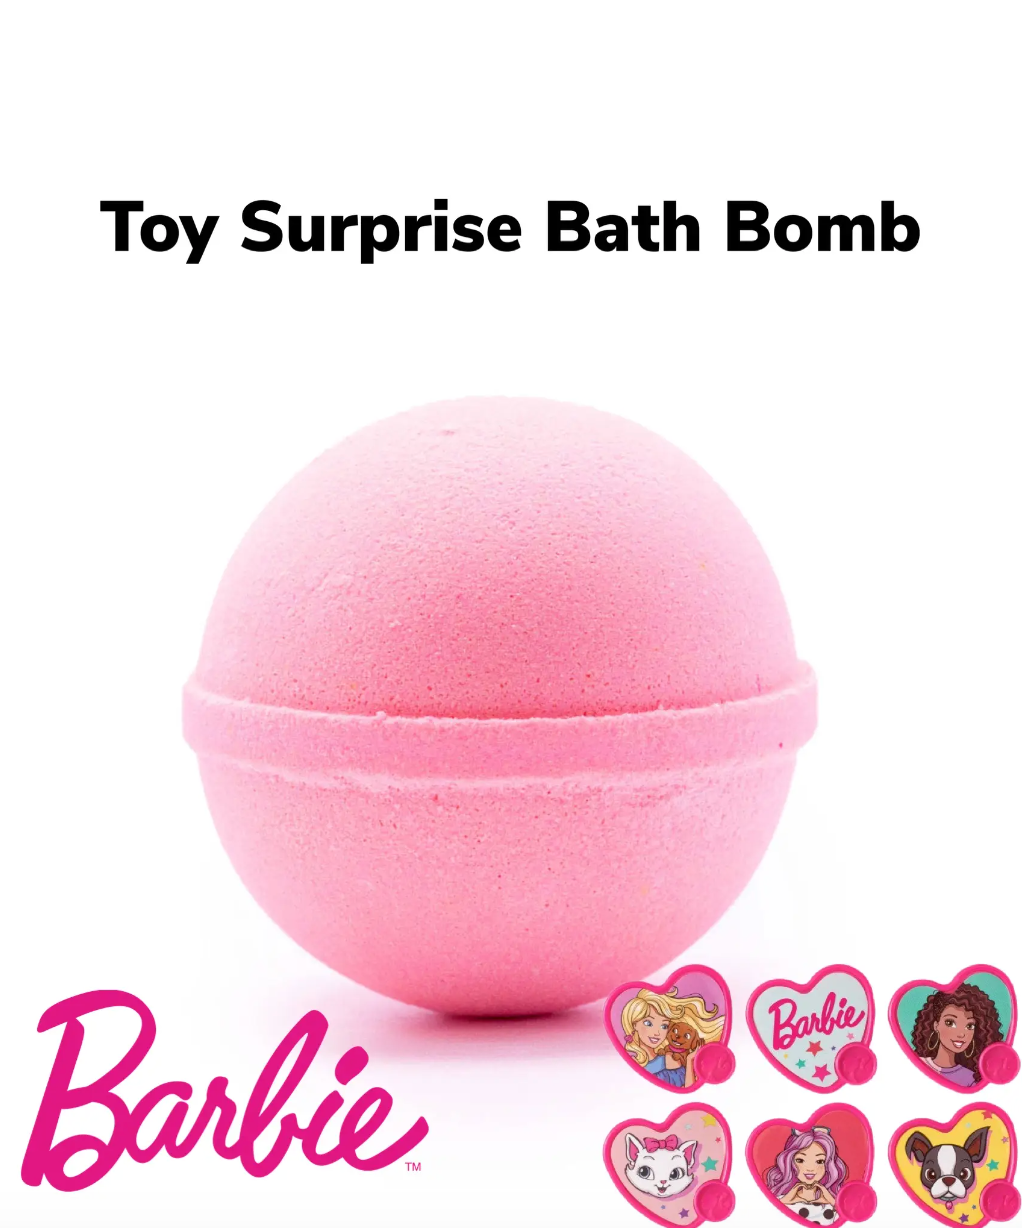 Doll Surprise Bath Bomb - Toy Inside